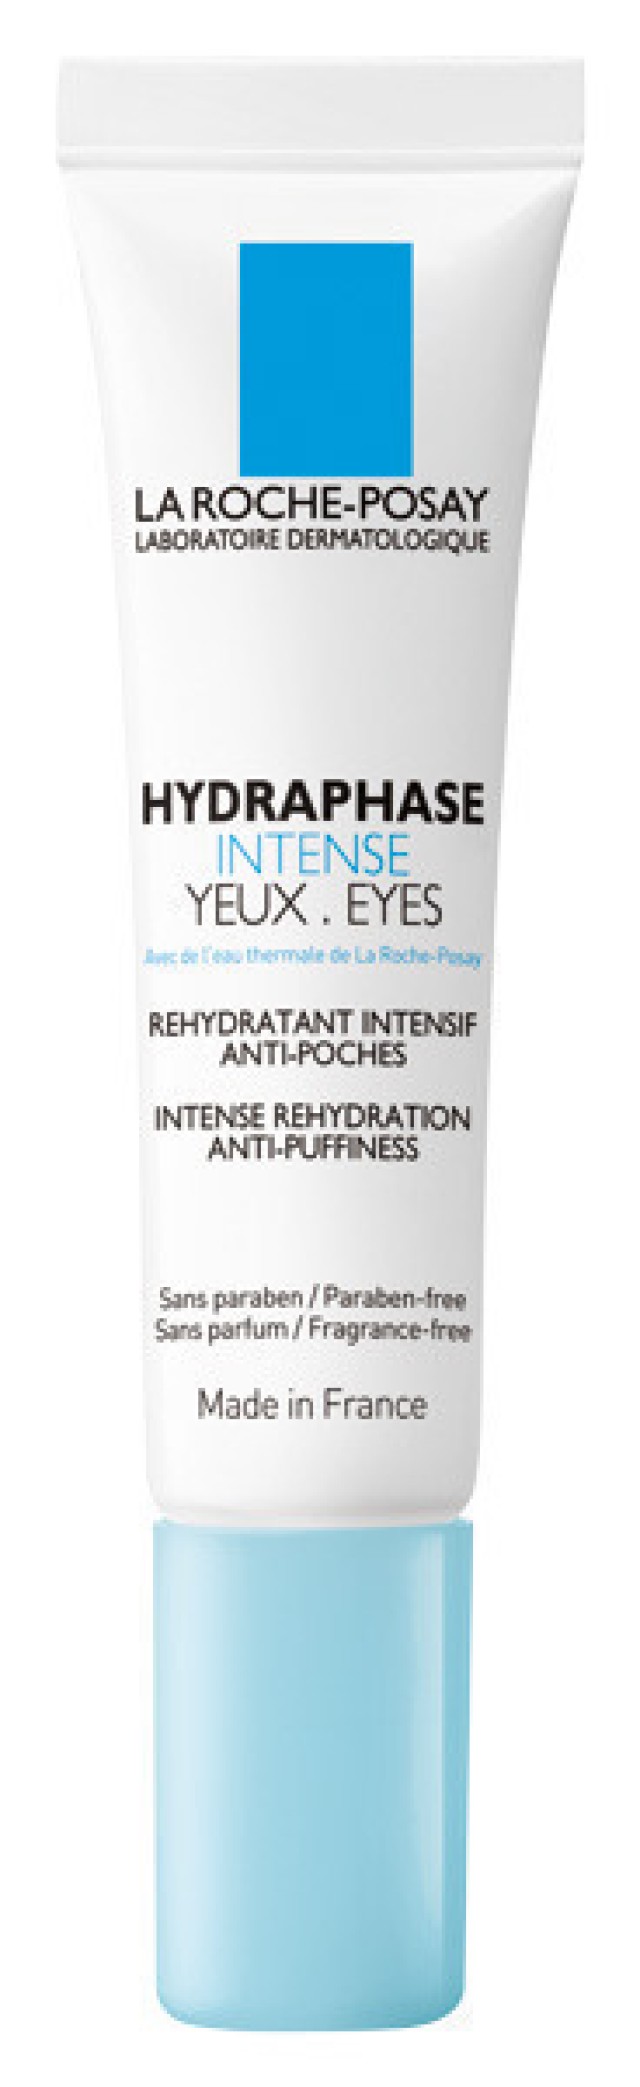 La Roche Posay Hydraphase Intense Eyes 15ml